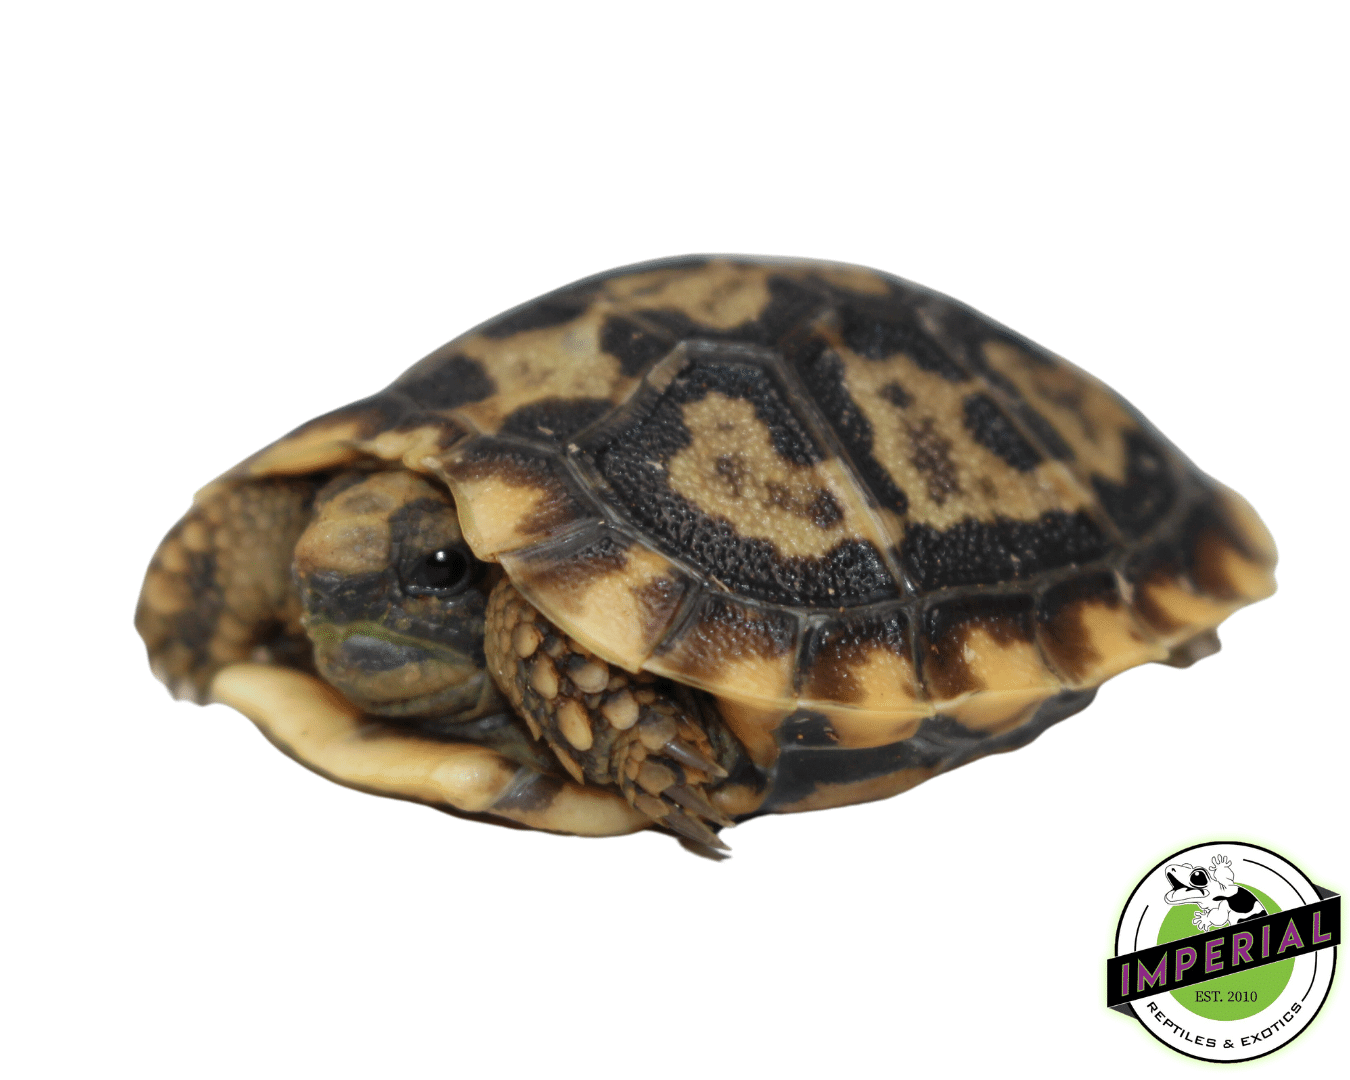 pancake tortoise for sale, buy reptiles online